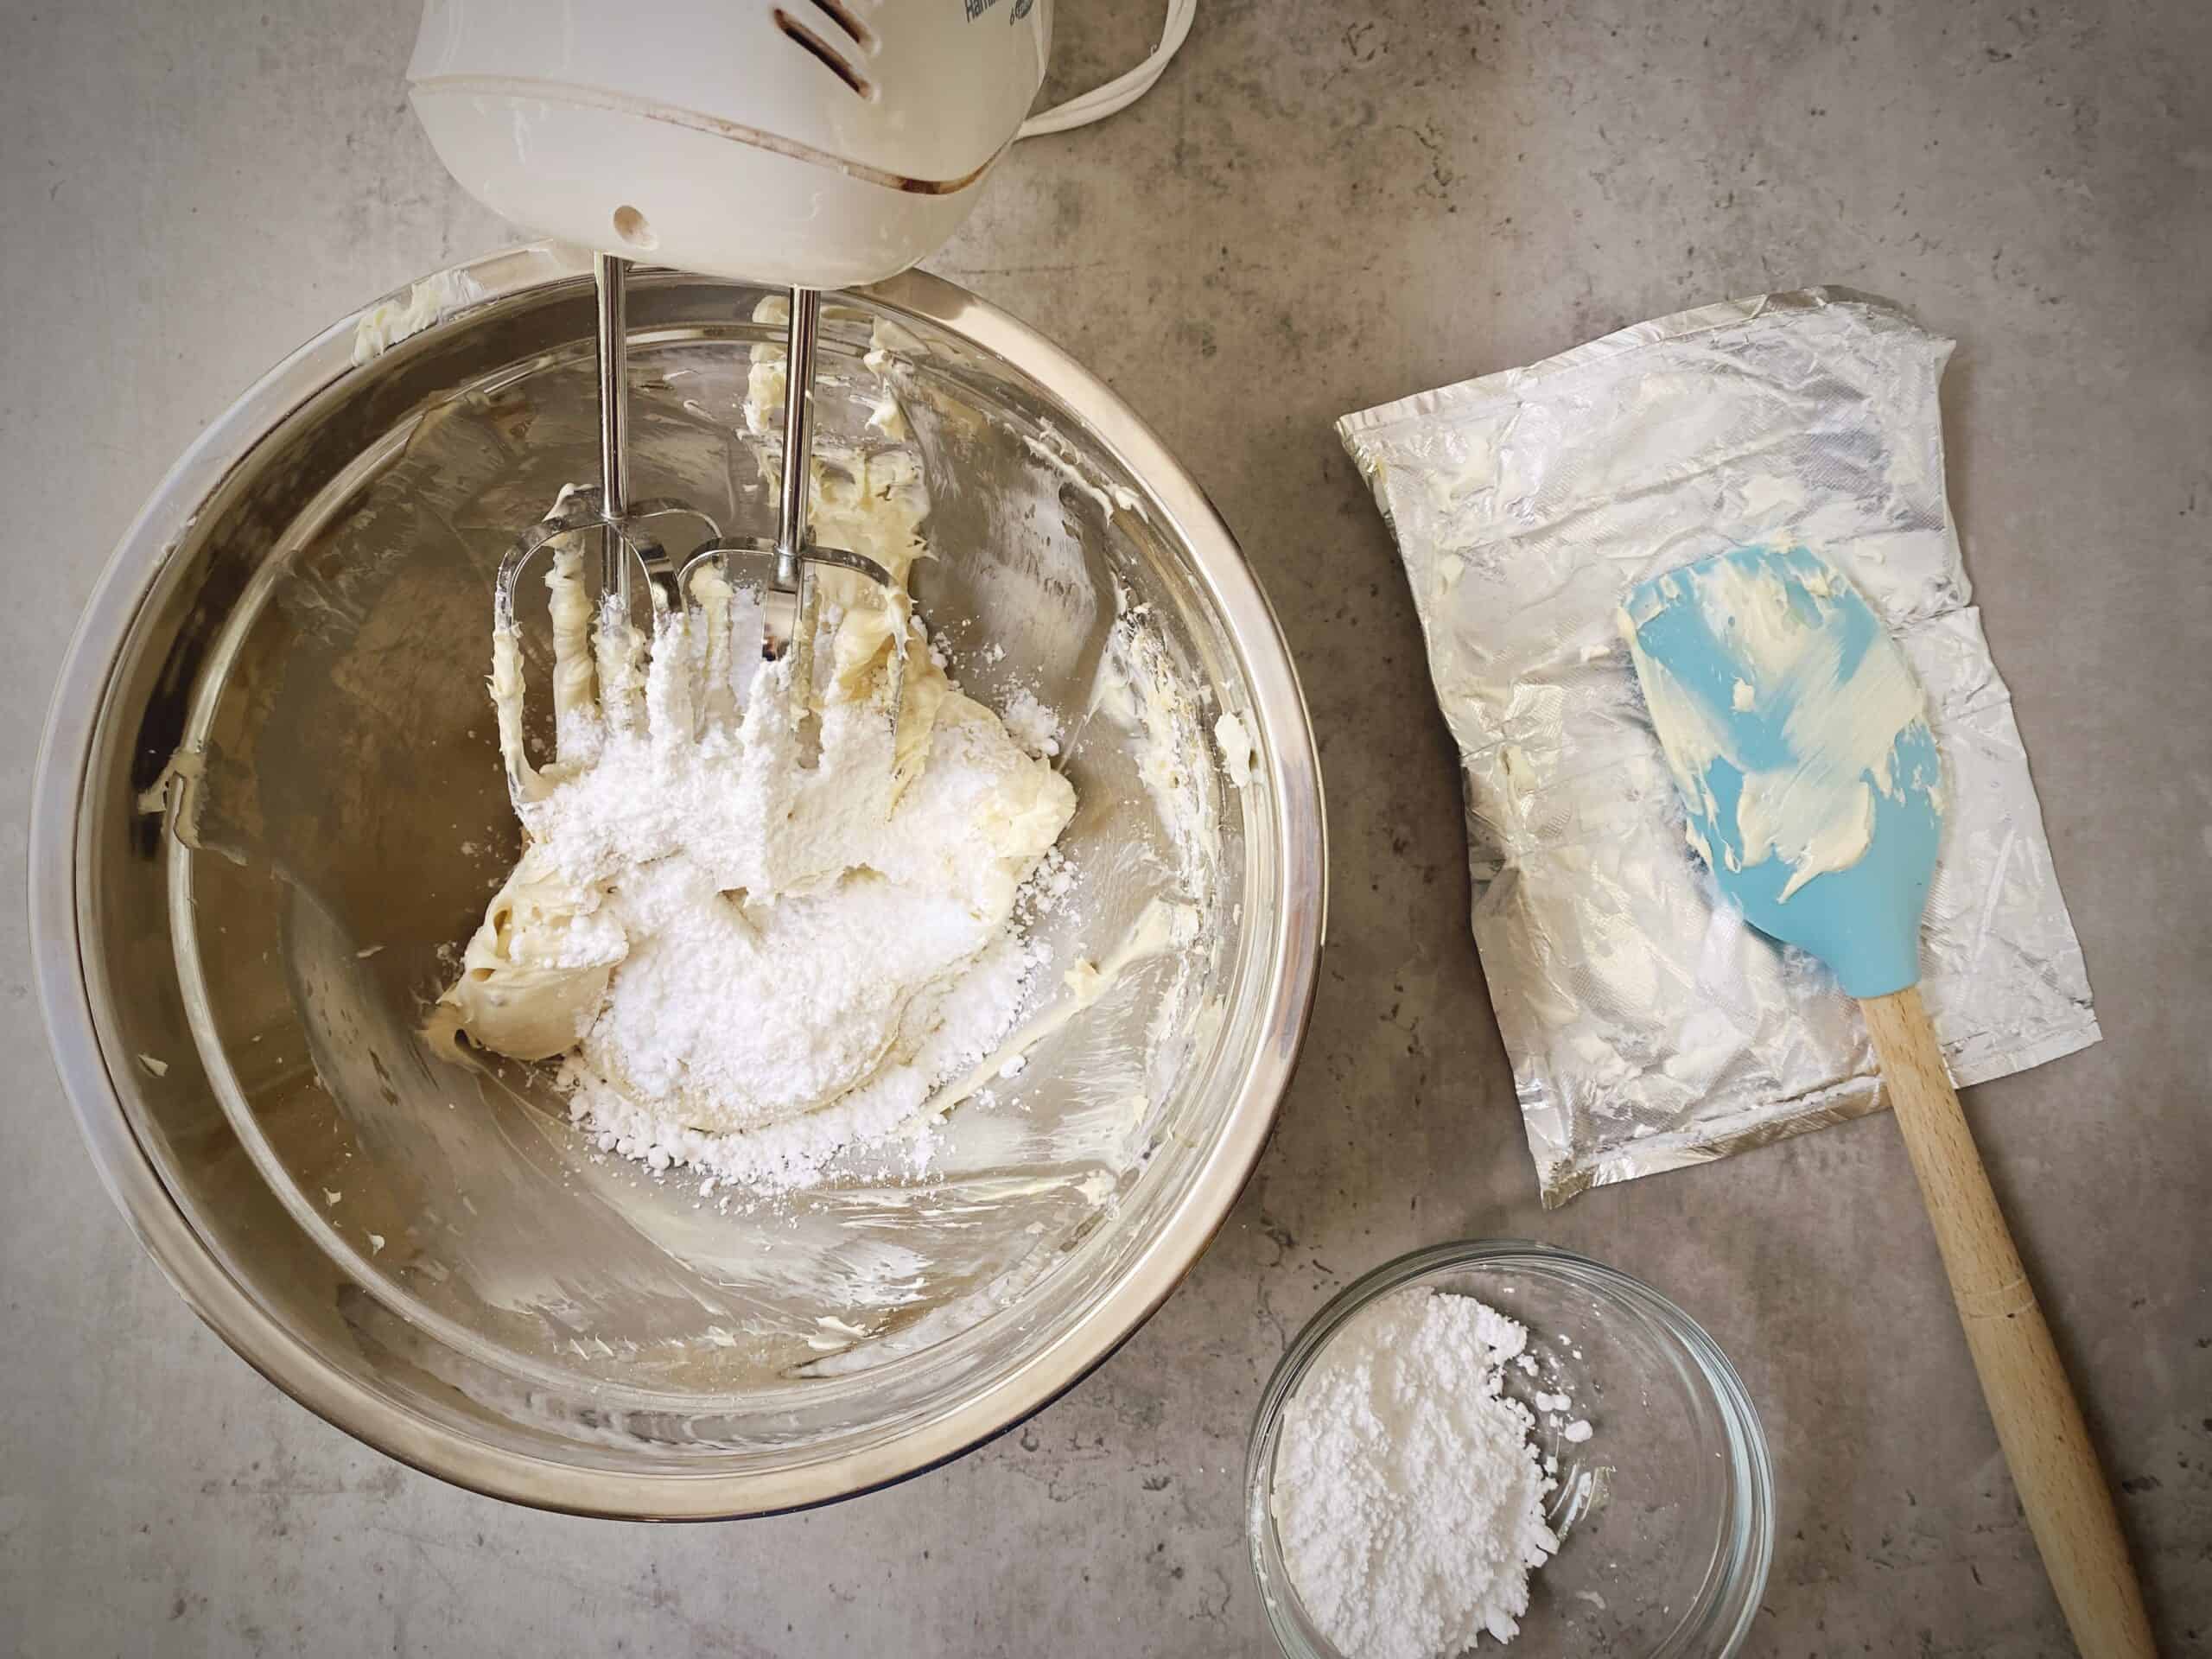 adding more powdered sugar to the cheesecake dip.